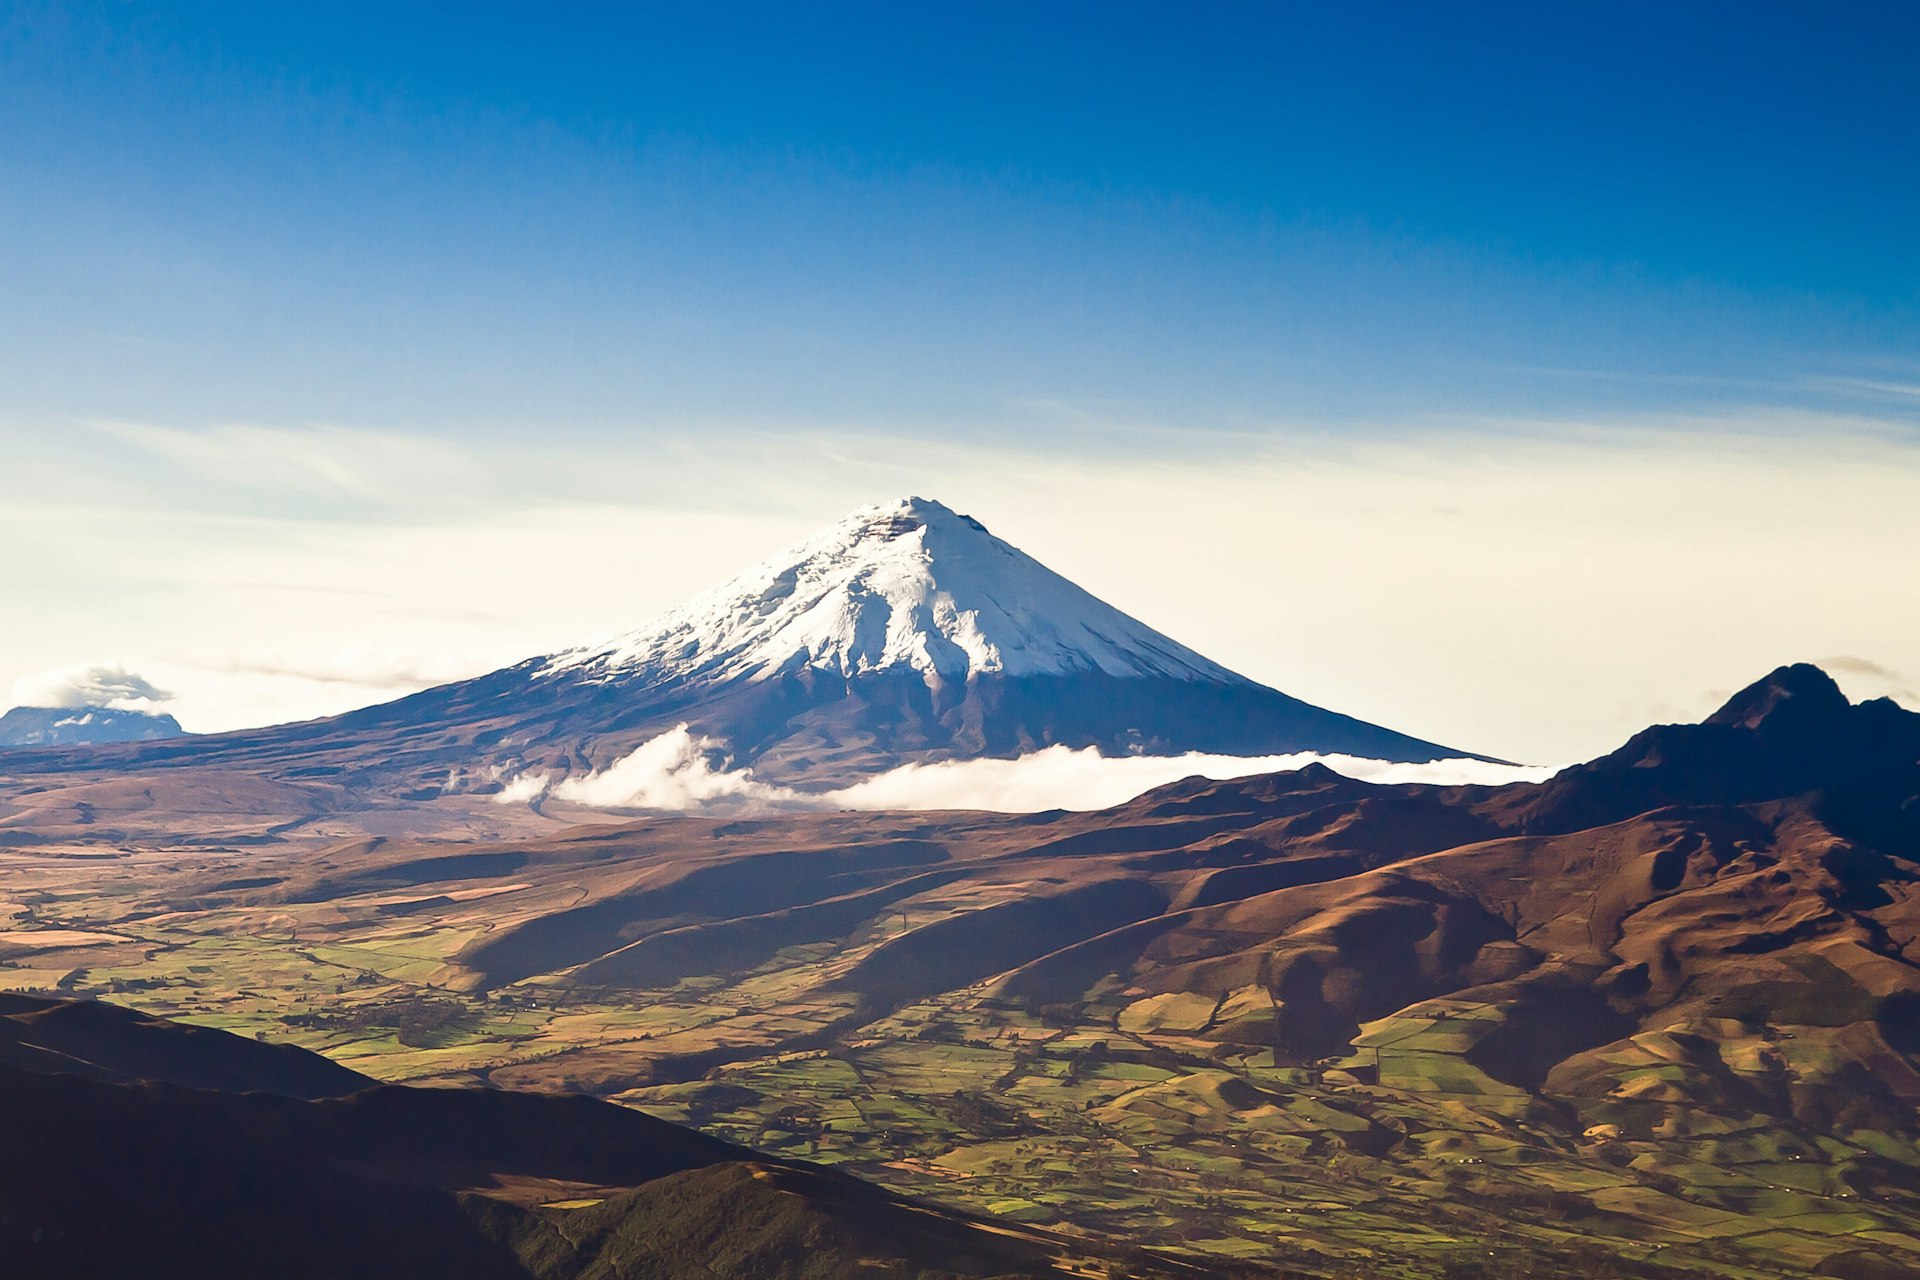 Wide-angle view of the snow-capped Cotopaxi volcano, Ecuador